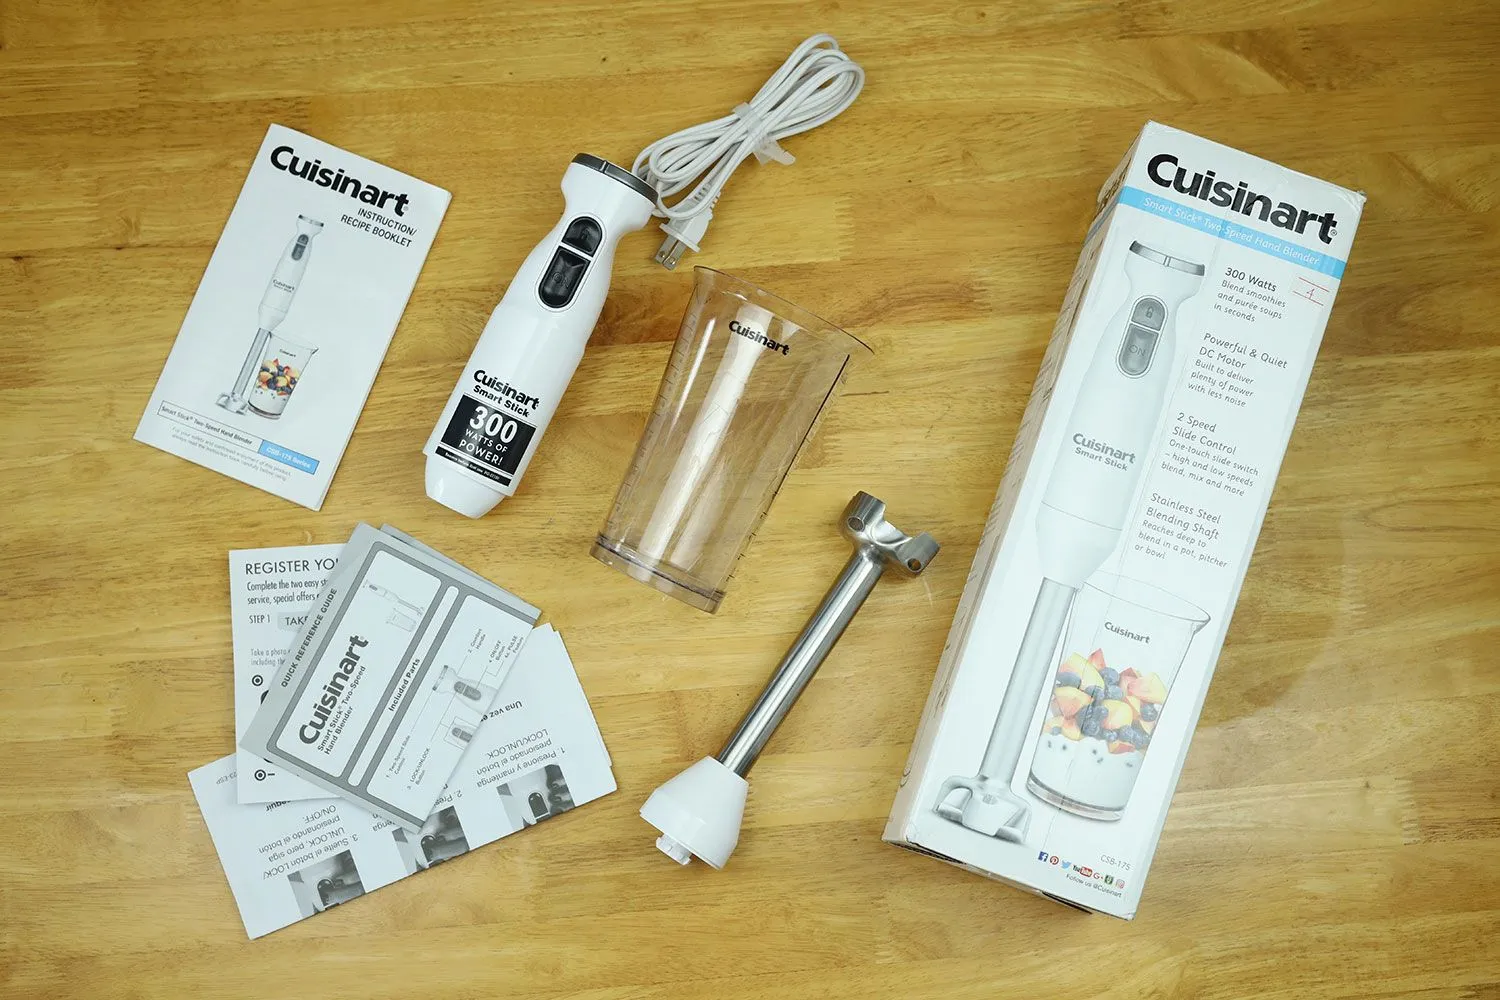 Cuisinart Smart Stick 2speed Immersion Blender